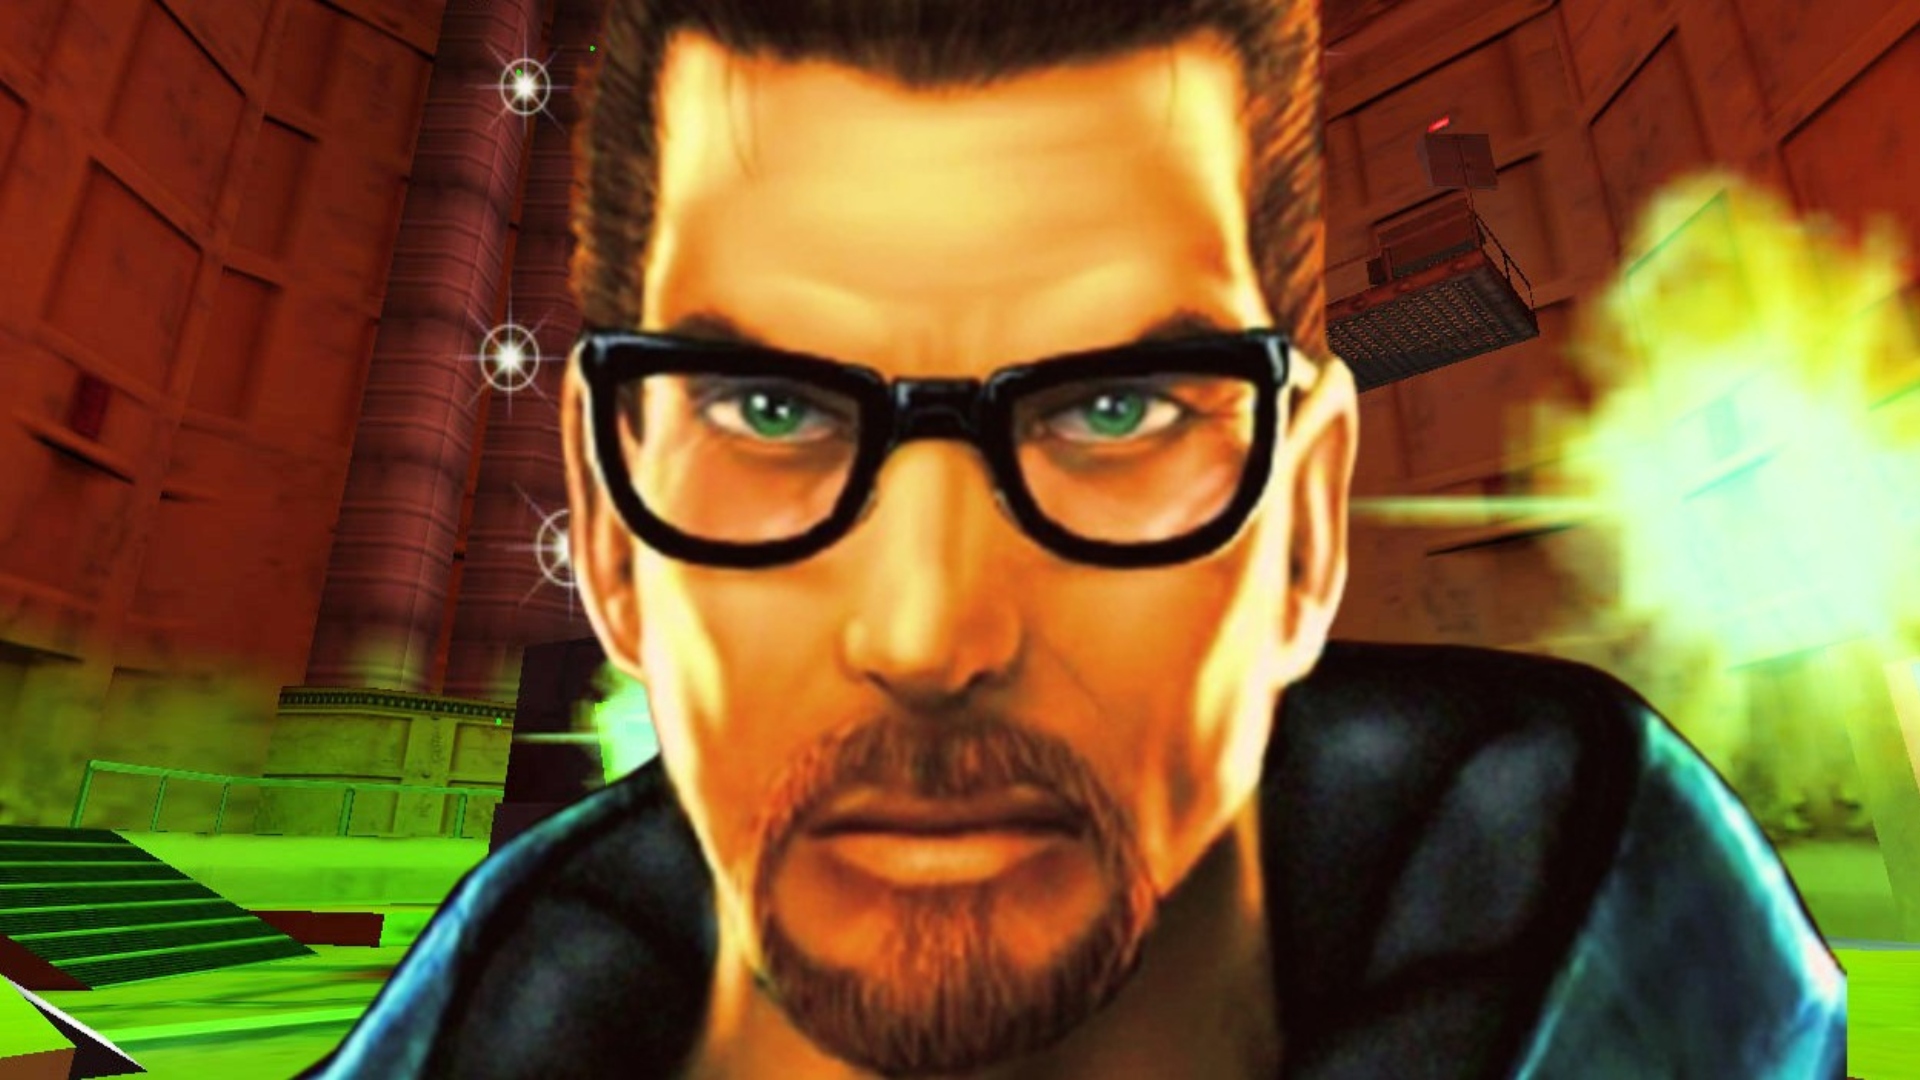 The G-Man - Combine OverWiki, the original Half-Life wiki and Portal wiki